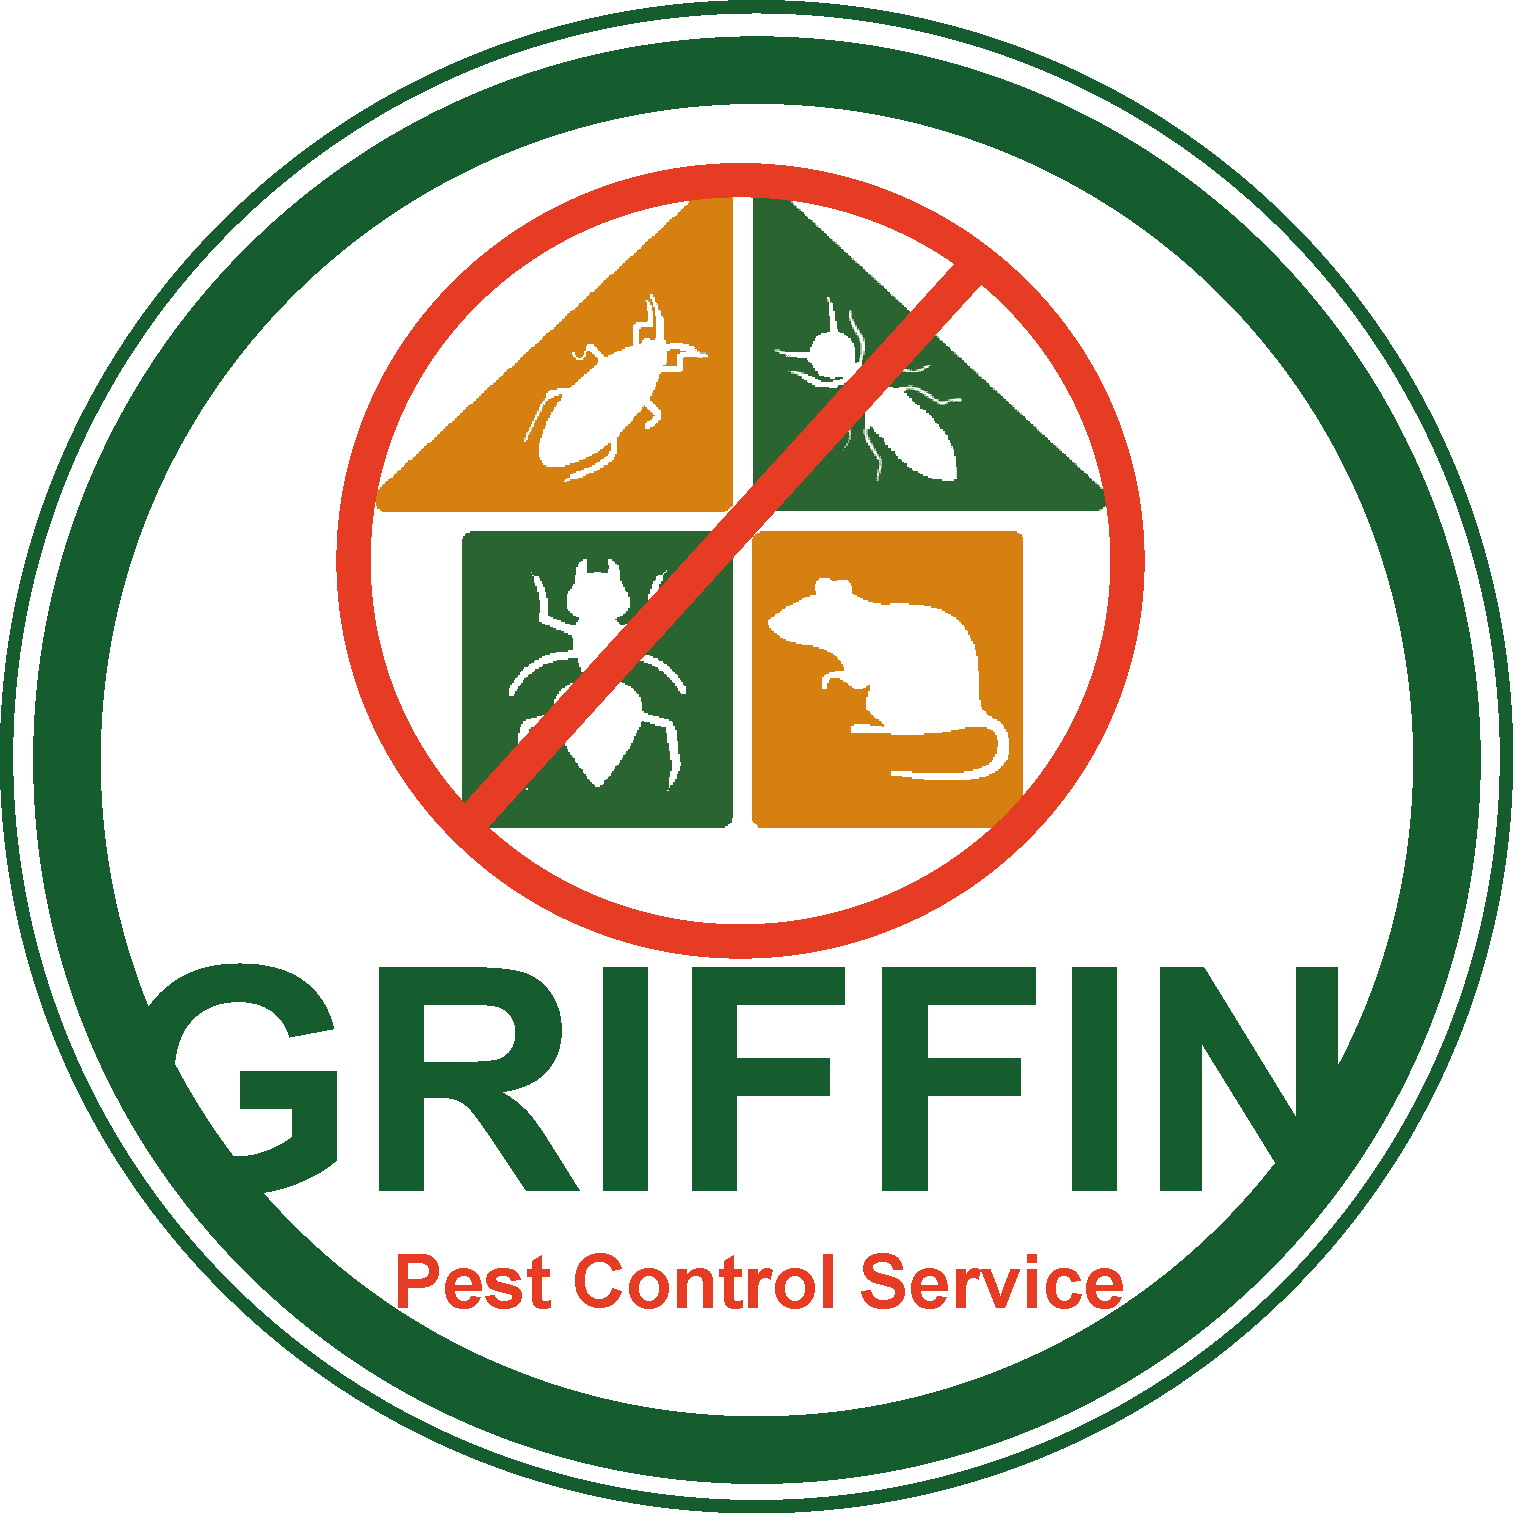 GRIFFIN PEST CONTROL SERVICE